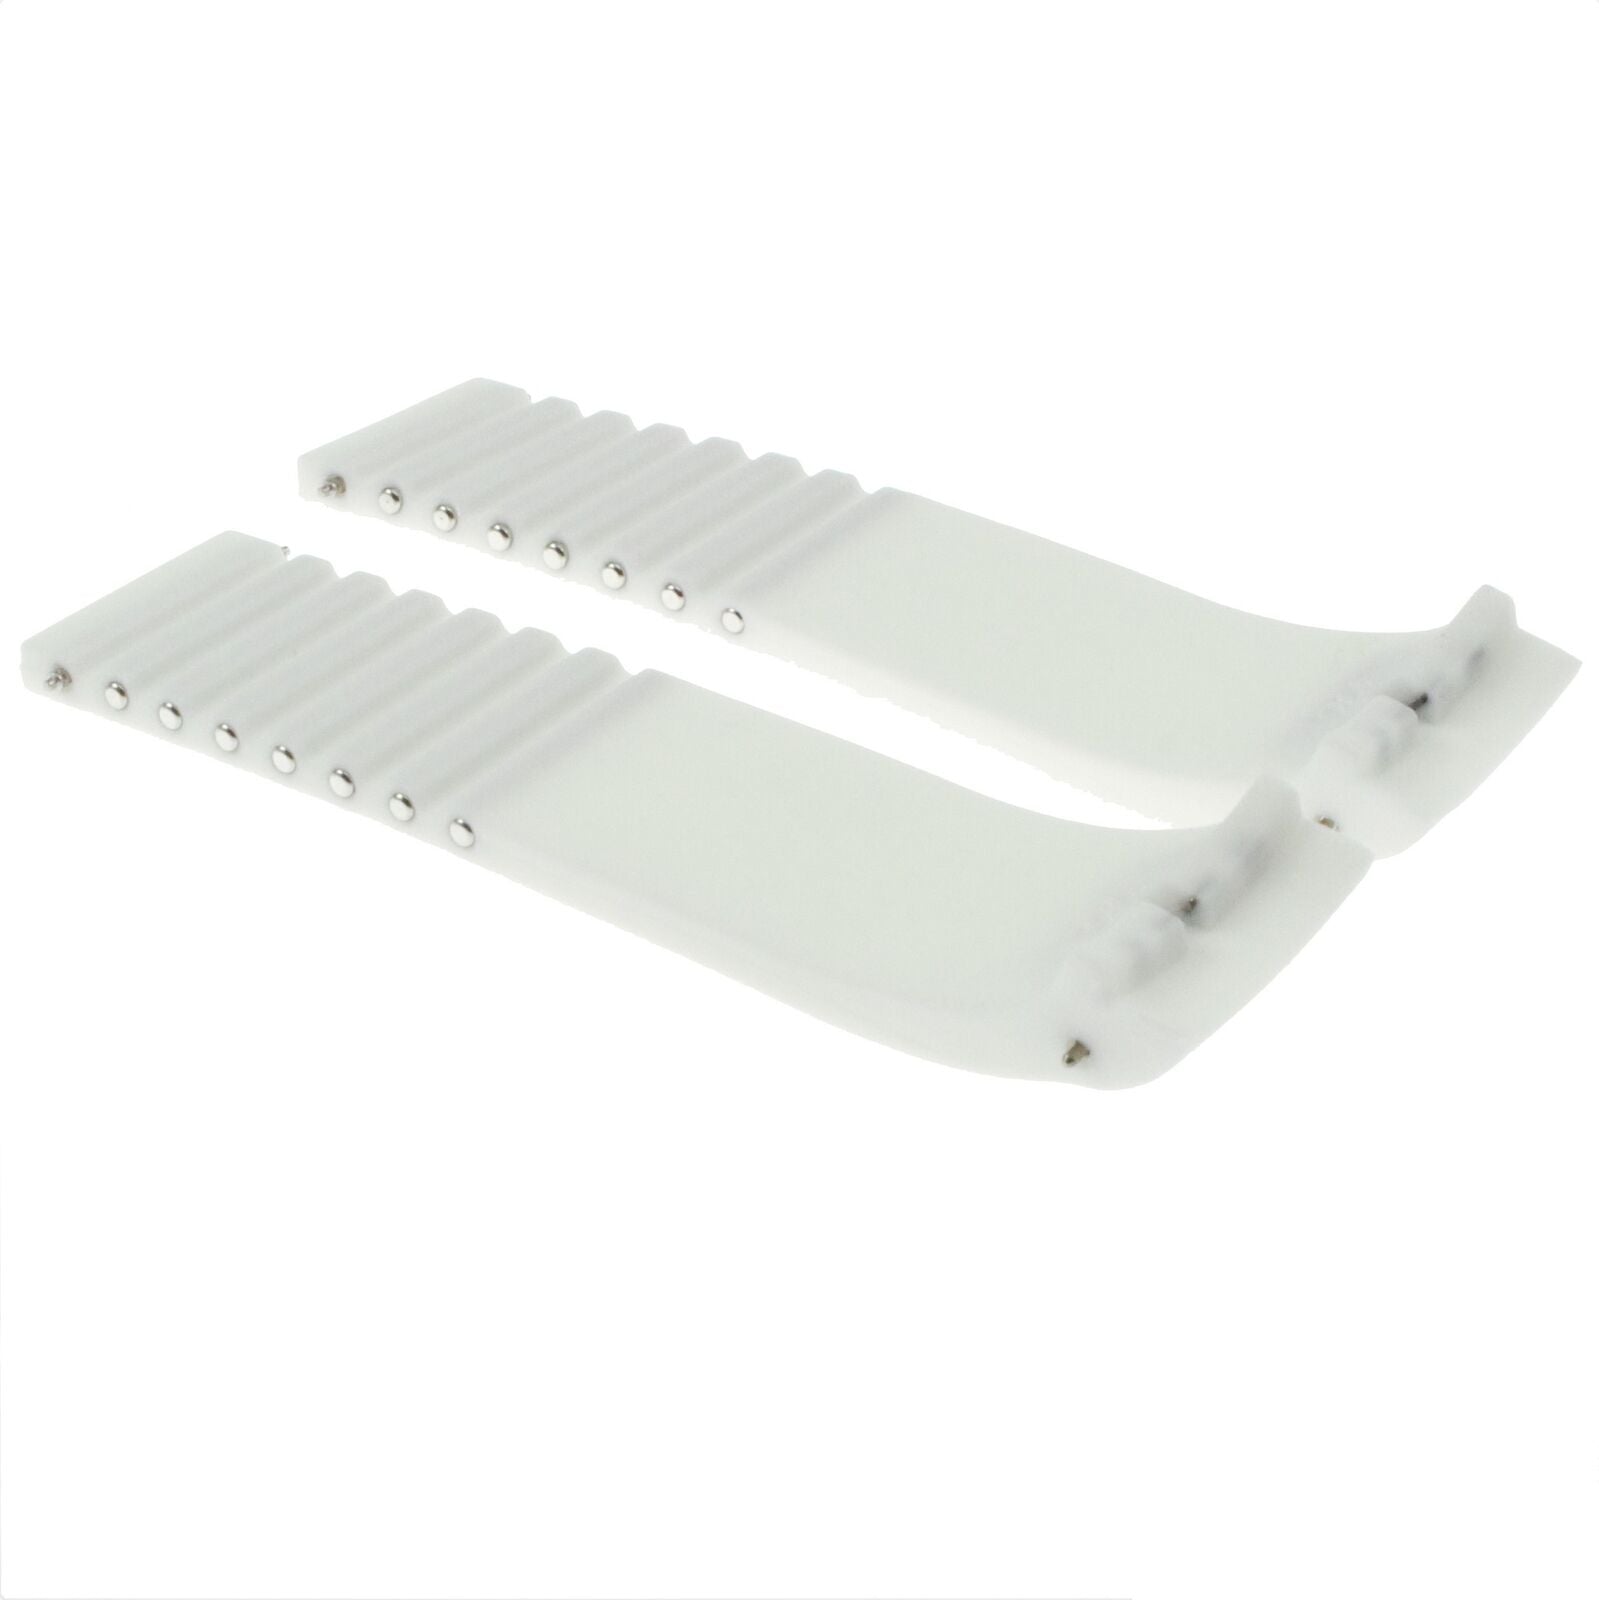 Sinn Integrated Silicone Strap (White)